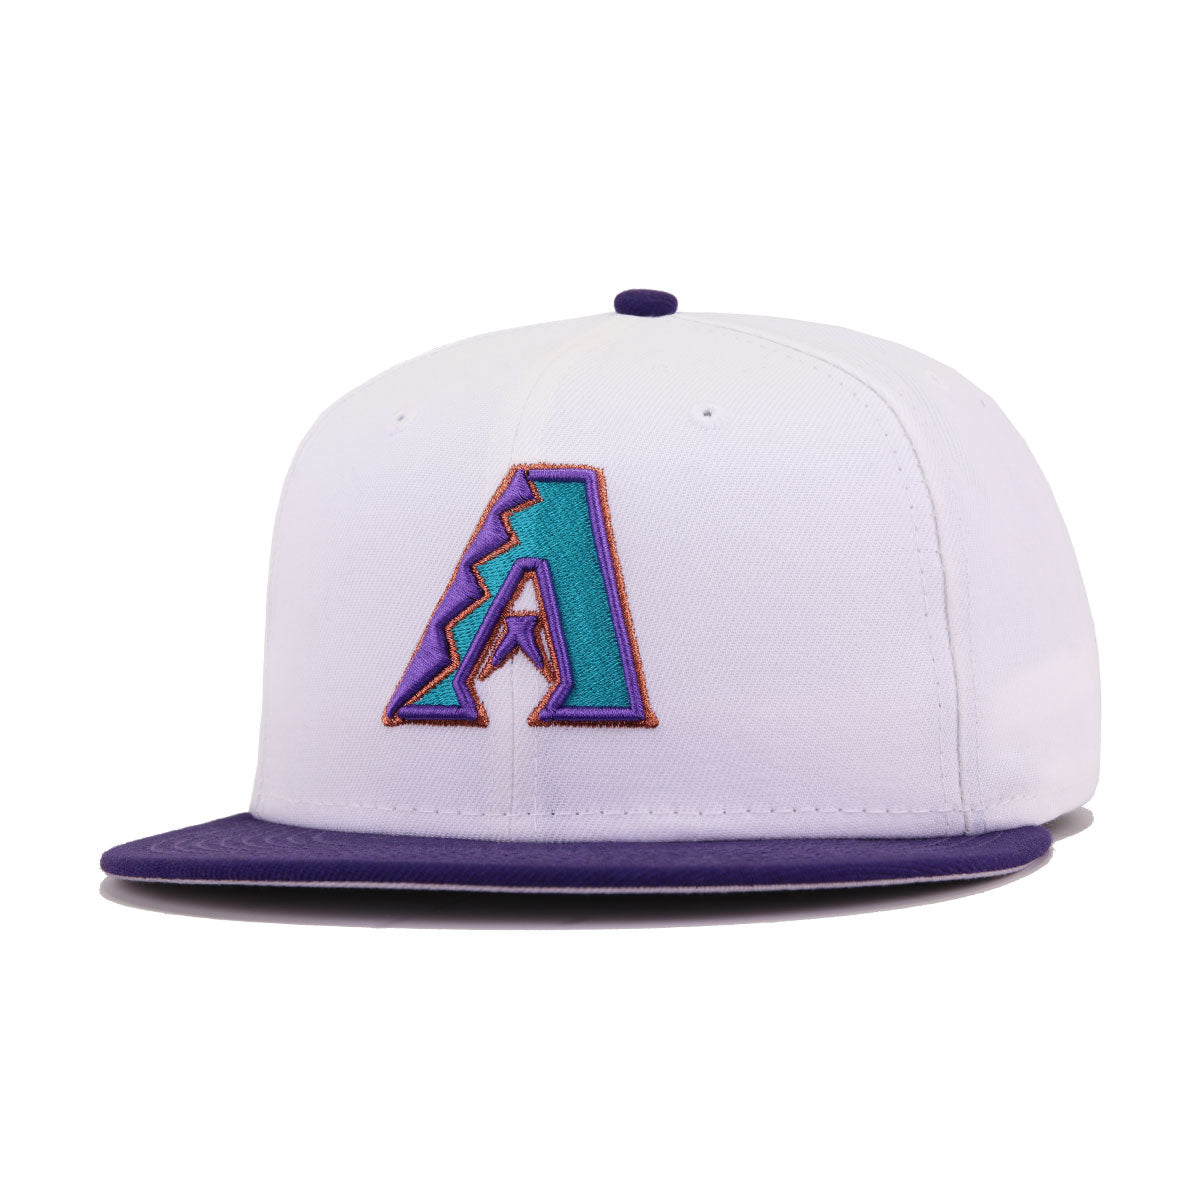 Arizona Diamondbacks Hat Off White/Cream Purple Fitted 59fifty 7 3/8 NewEra  for Sale in Norwalk, CA - OfferUp